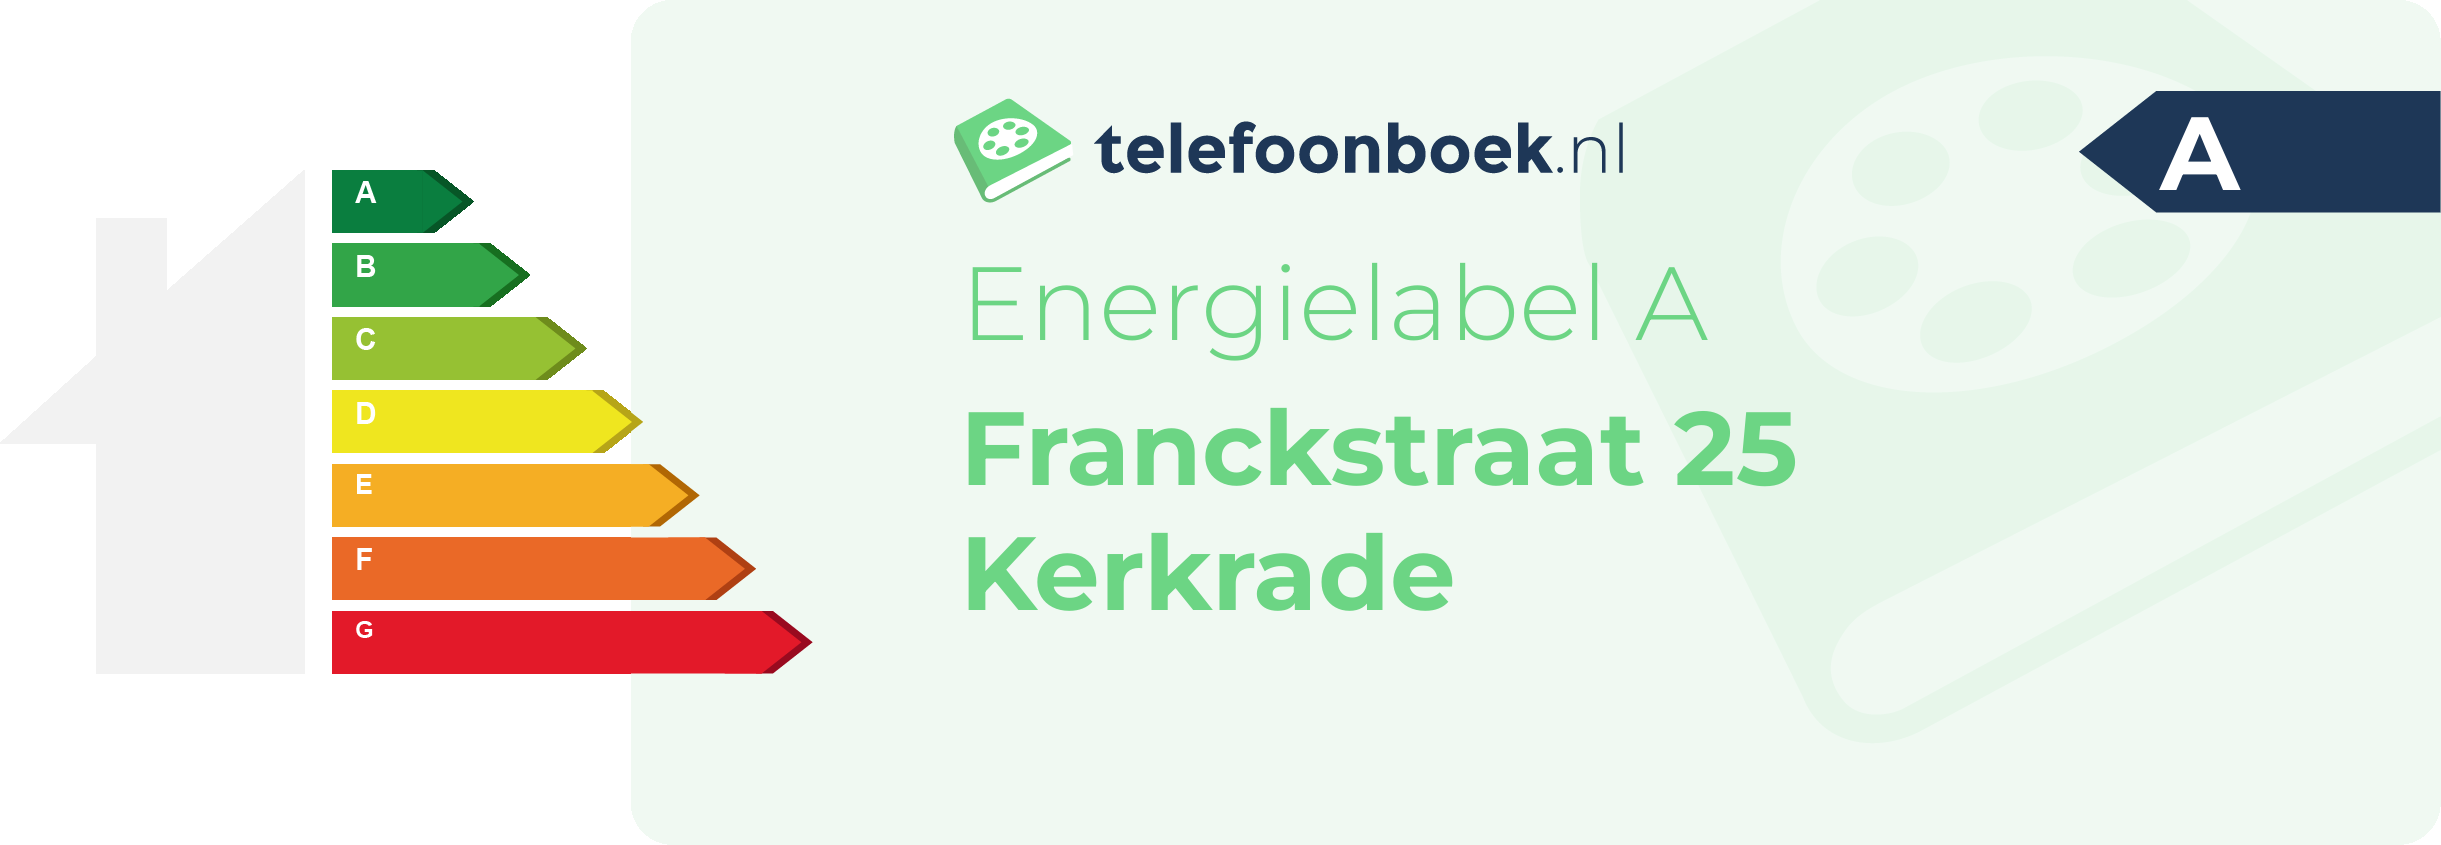 Energielabel Franckstraat 25 Kerkrade